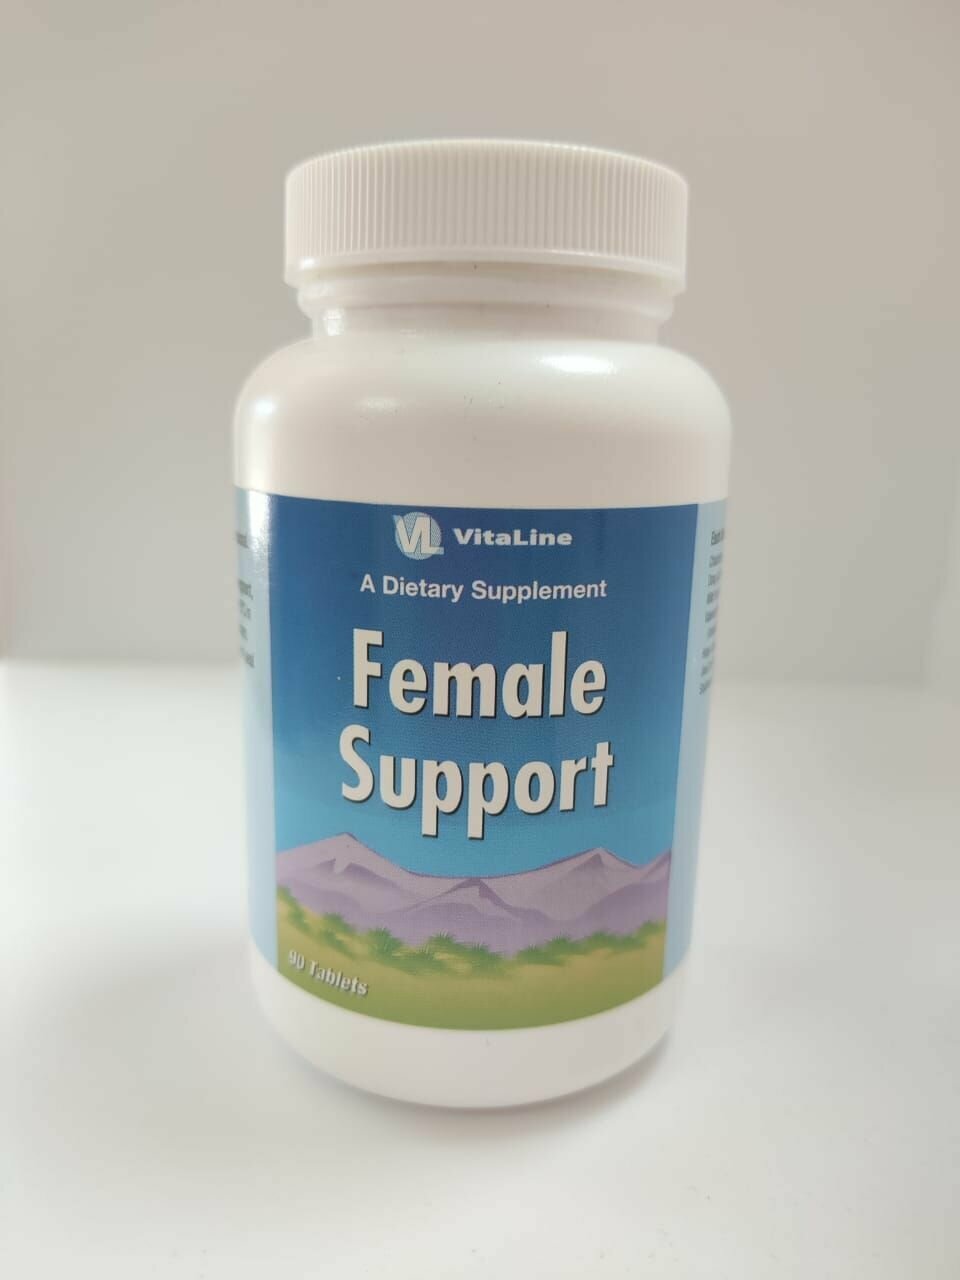 Женская Поддержка (Женский Комфорт-2), Female Support, Vitaline, 870 мг